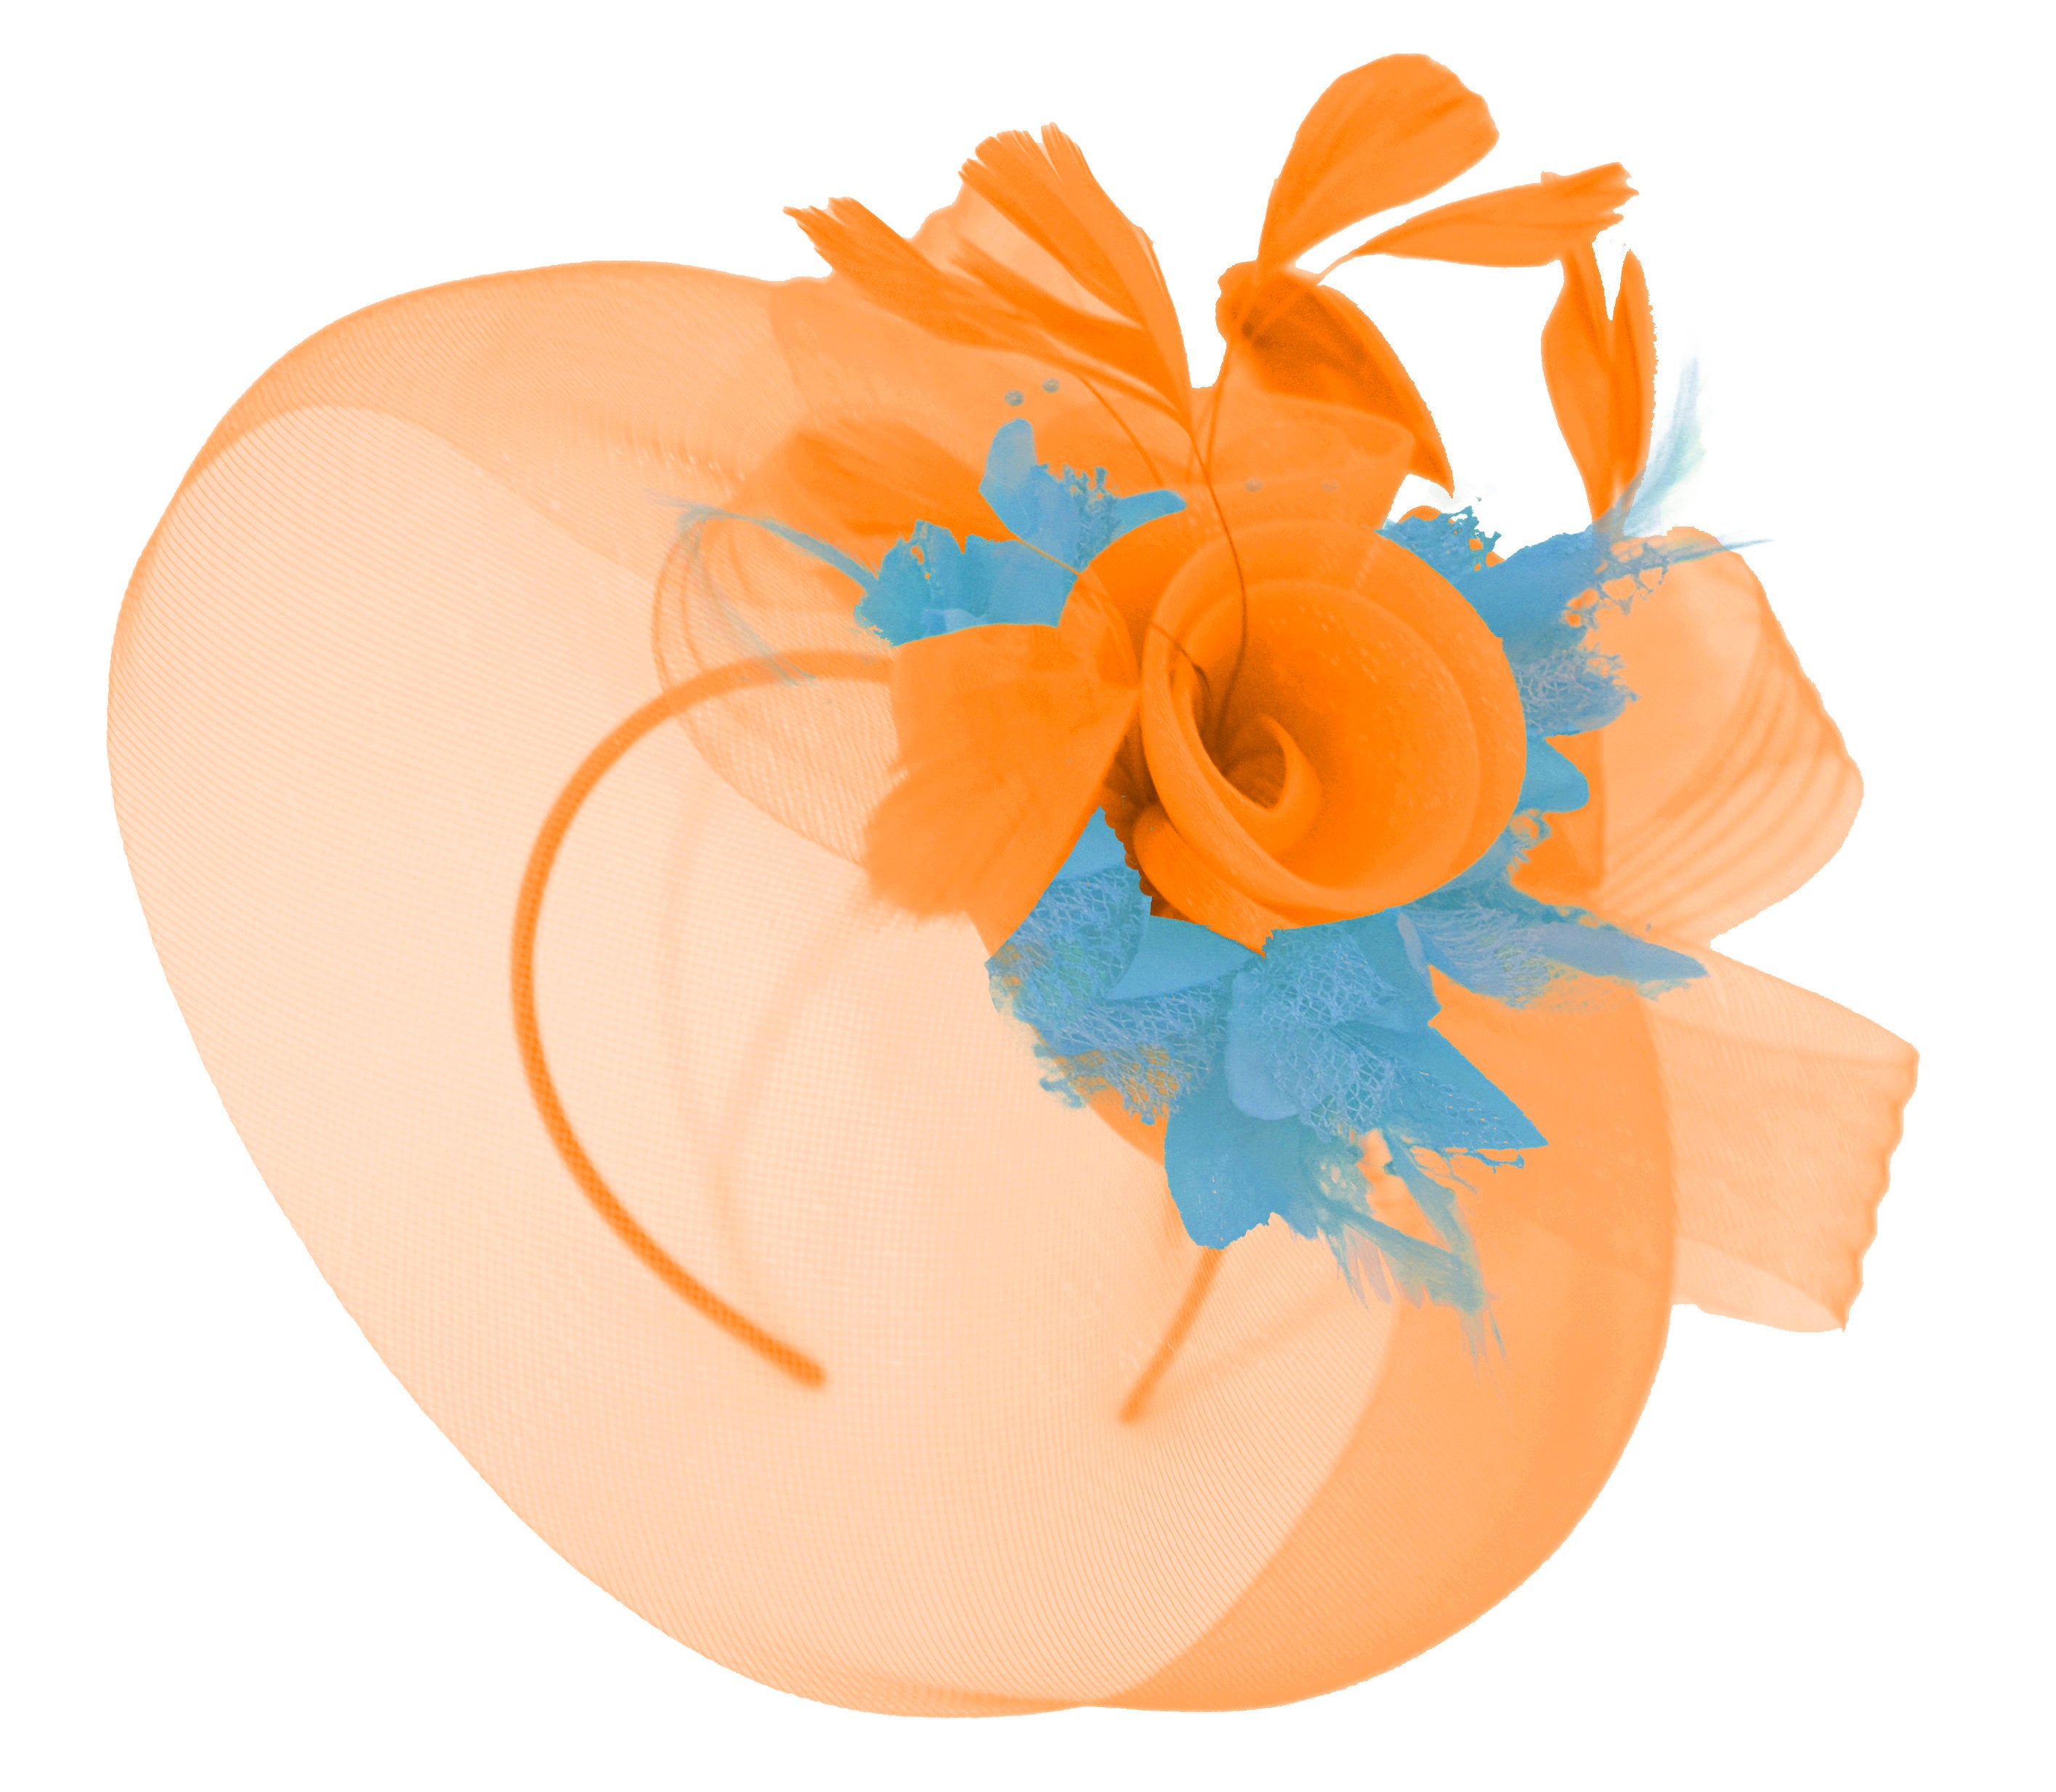 Caprilite Orange and Aqua Fascinator Hat Veil Net Hair Clip Ascot Derby Races Wedding Headband Feather Flower